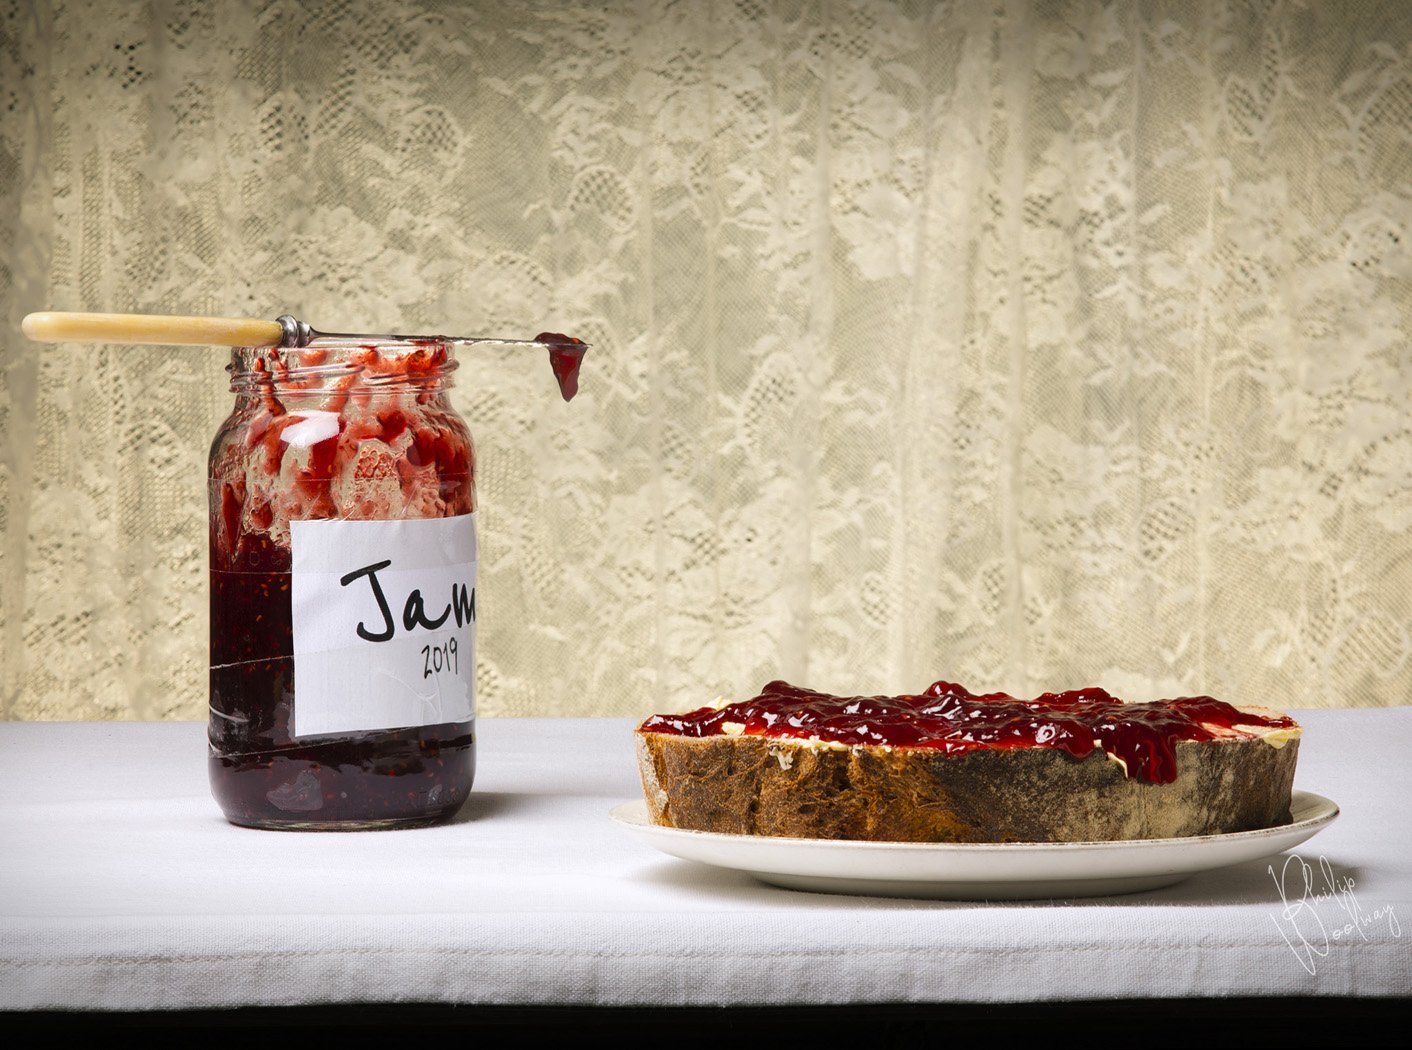 Jam and the doorstep - culinary heaven